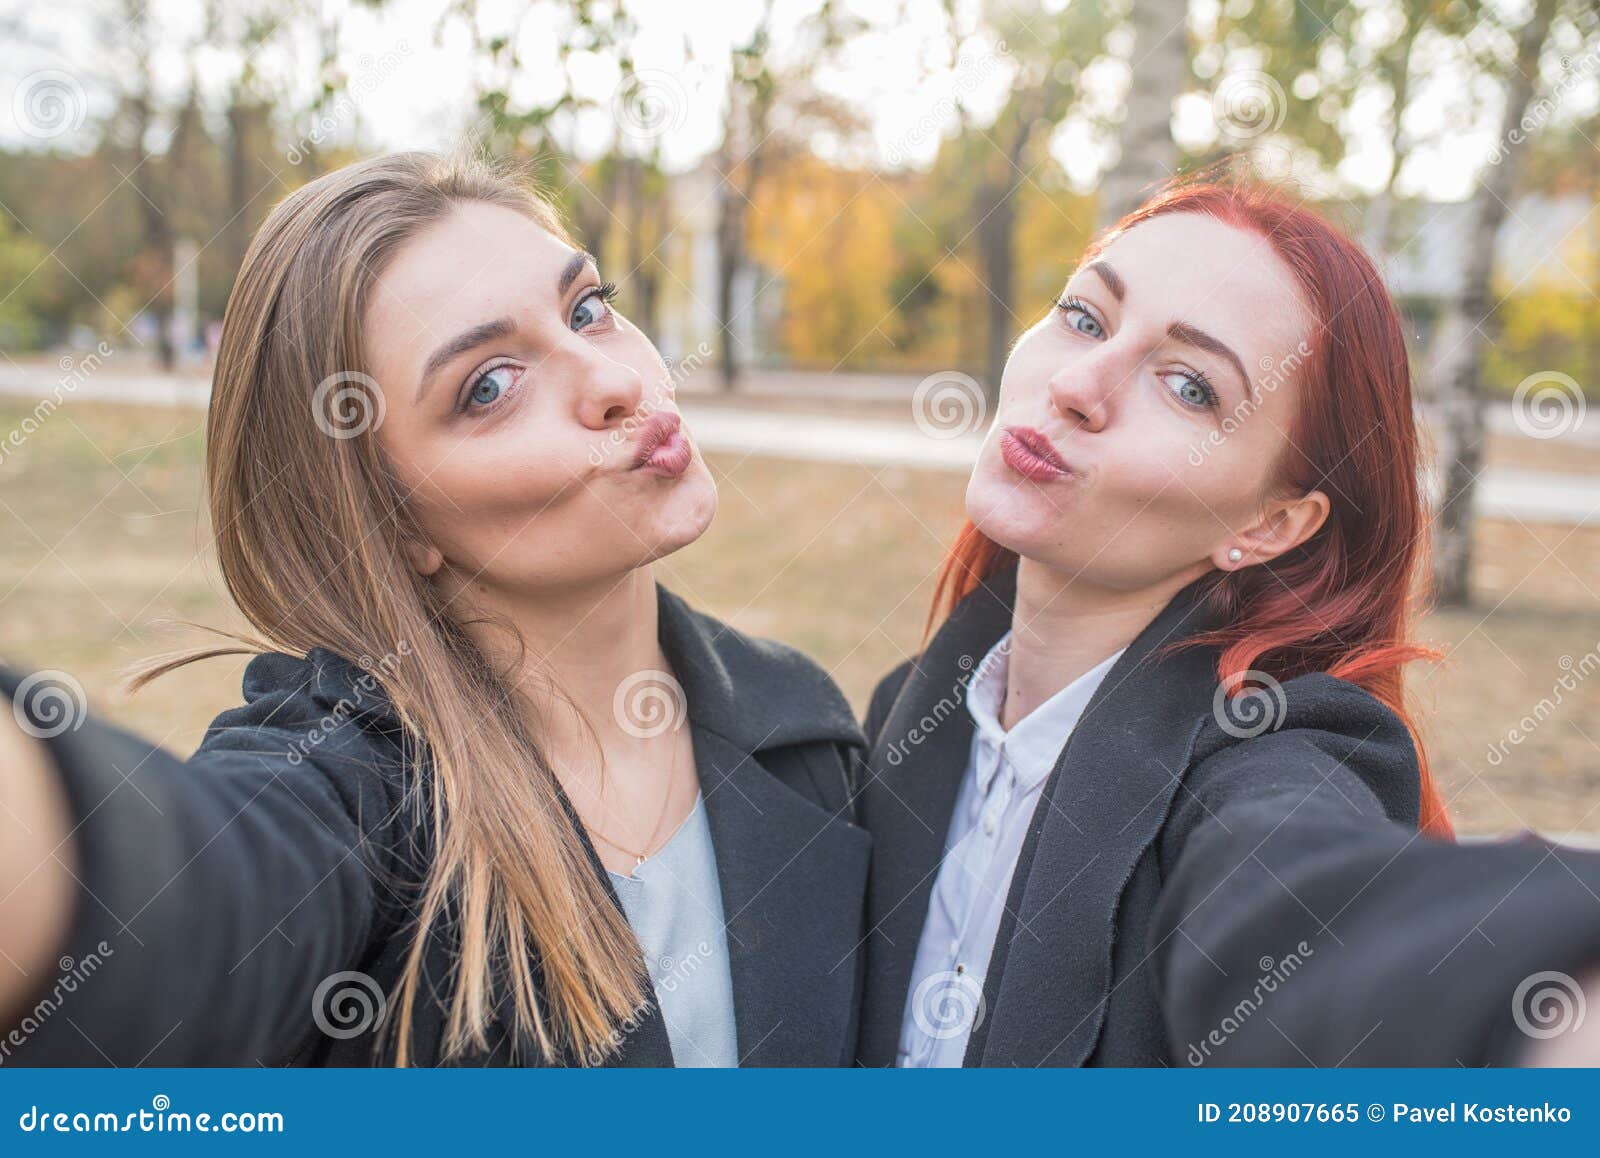 cute teen selfie daughter young blonde gf girlfriend